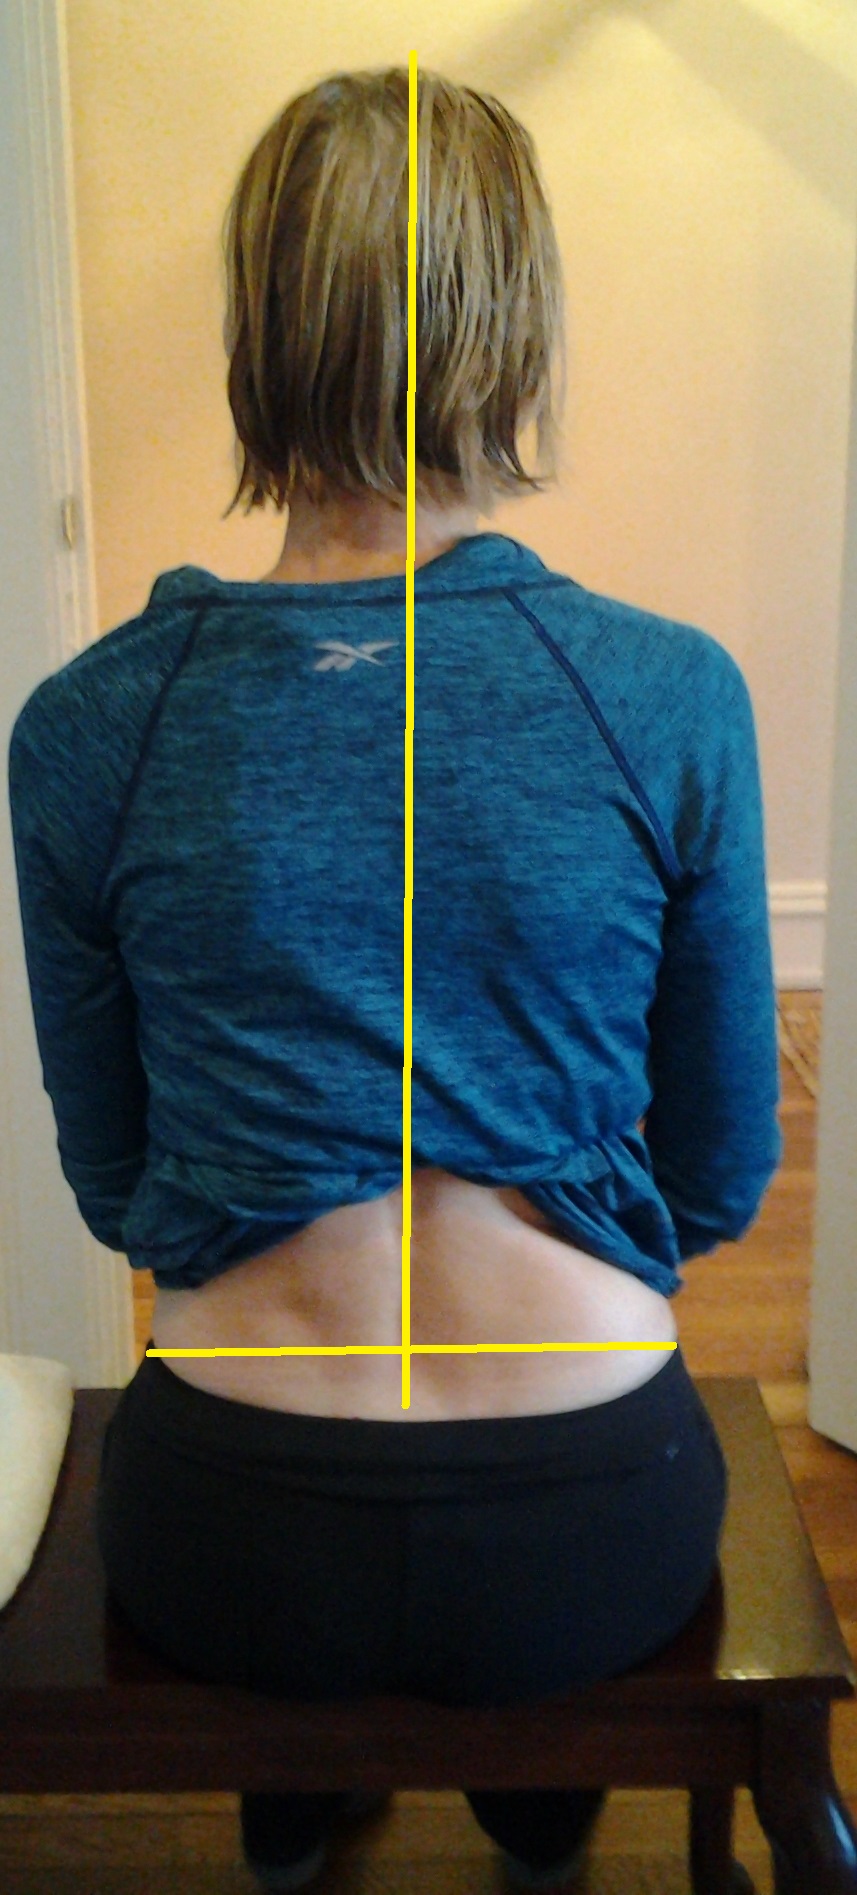 The lateral pelvic tilt : the degree of lateral pelvic tilt is measured